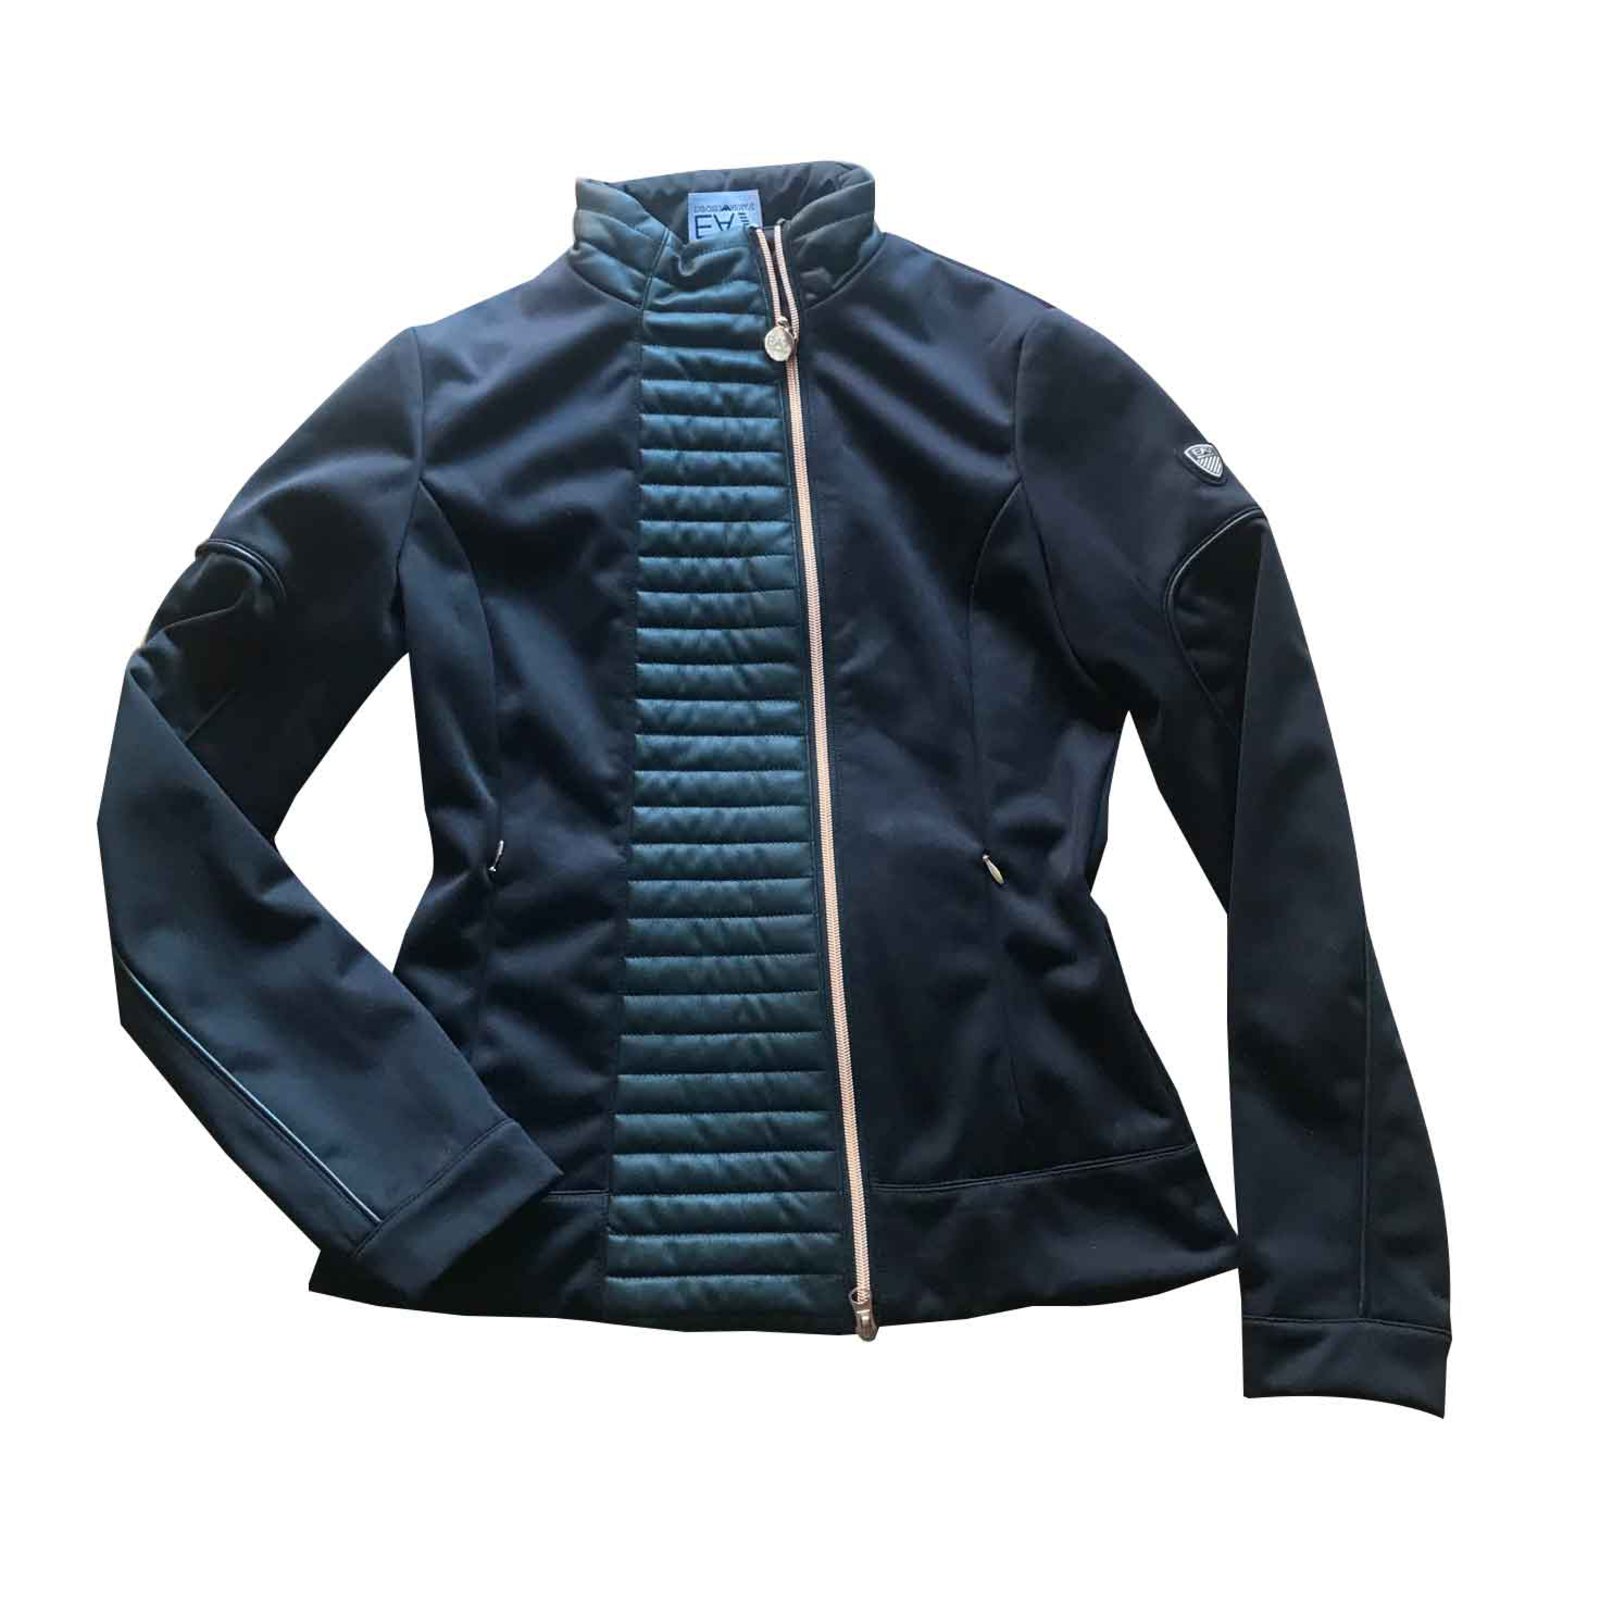 armani new jackets